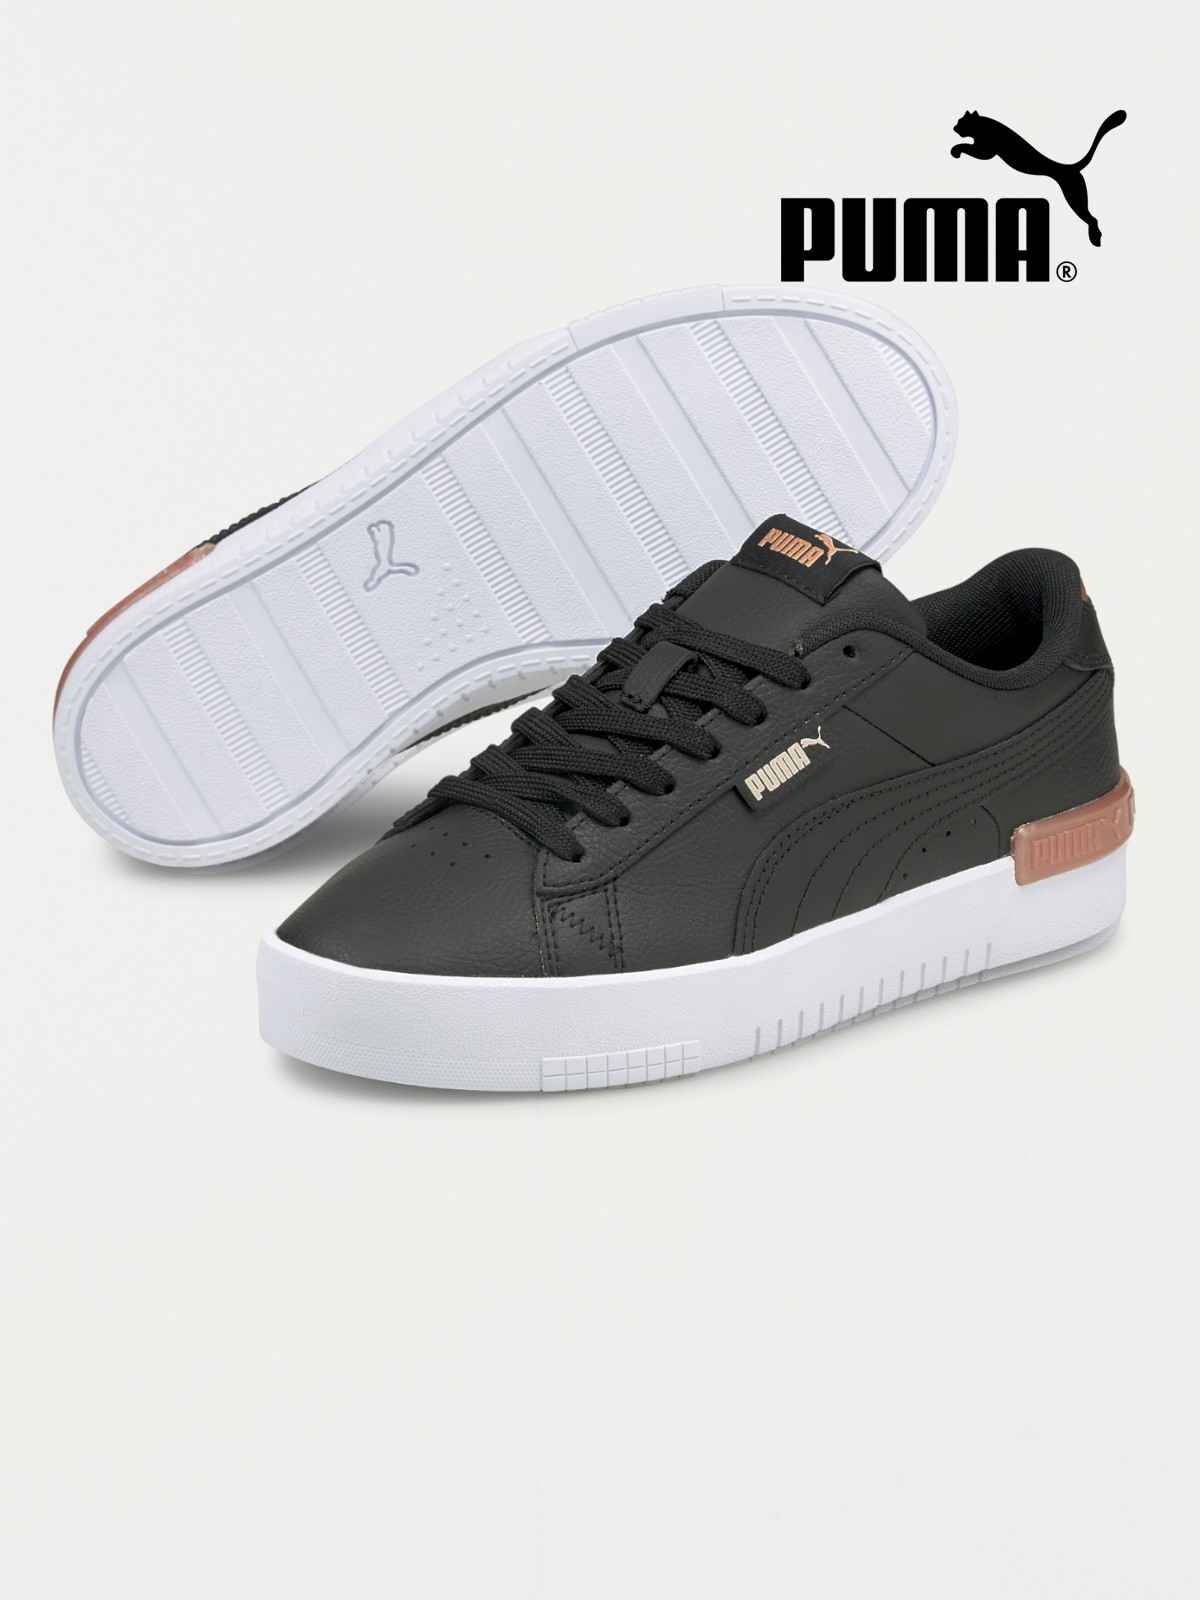 Chaussures Puma femme